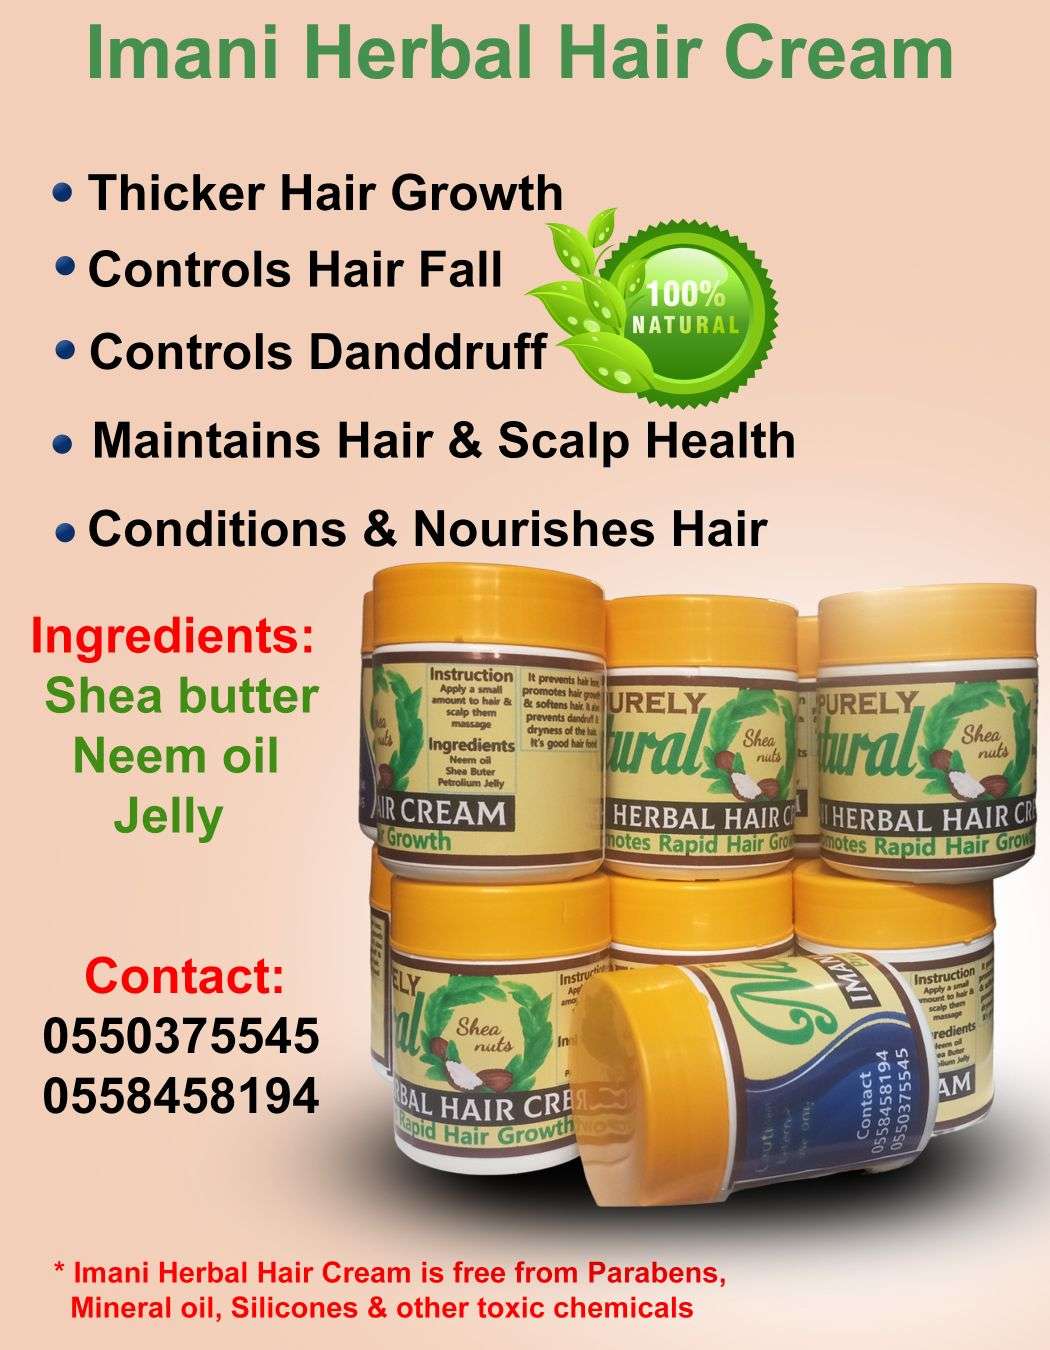 Imani Herbal Hair Cream